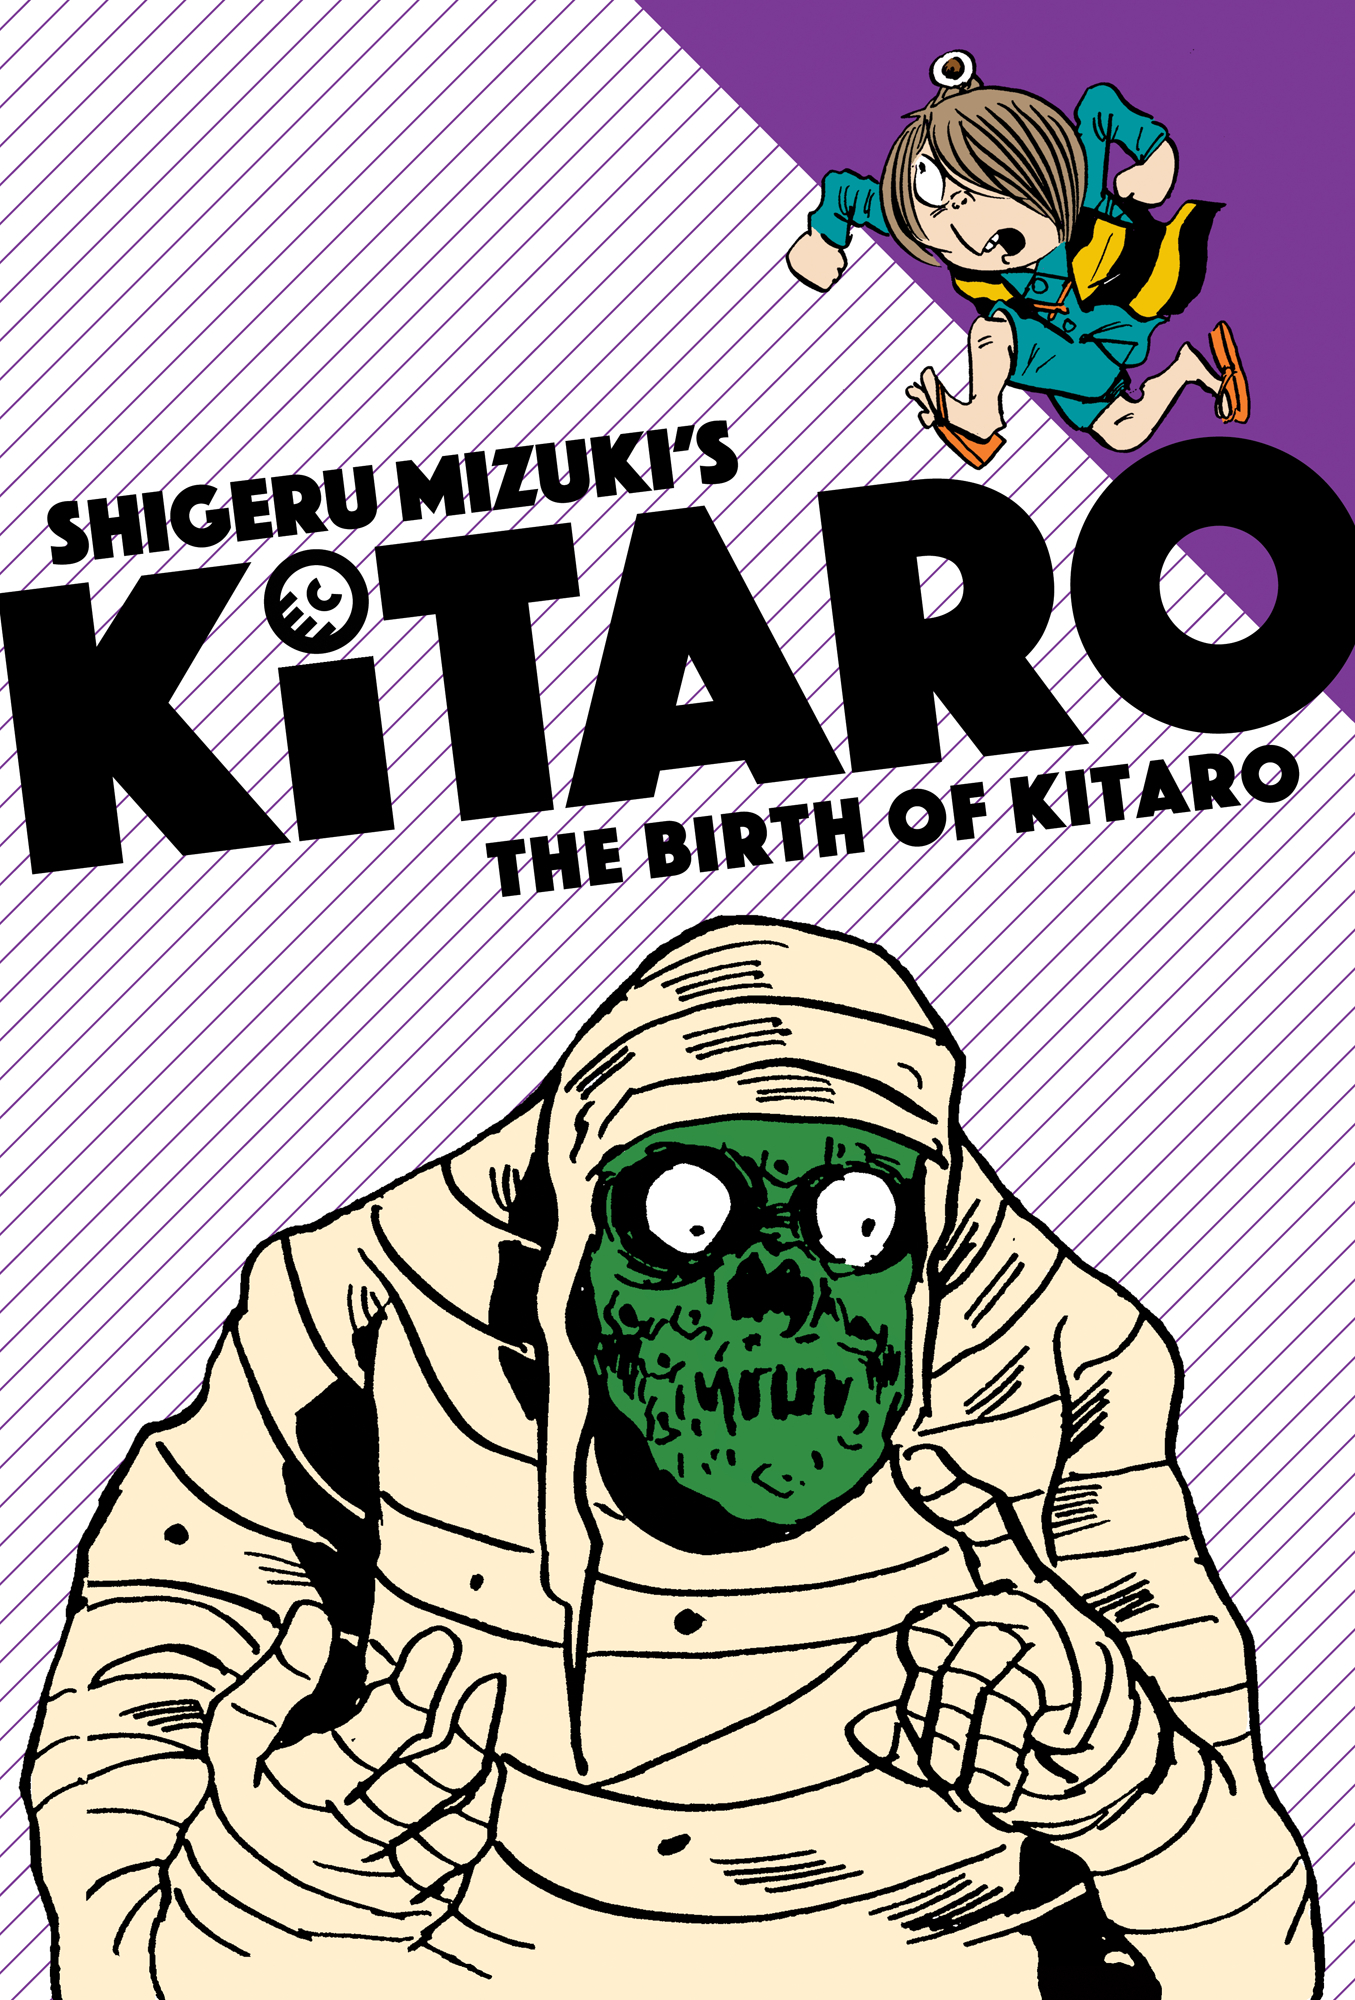 Kitaro Manga Volume 1 Birth of Kitaro